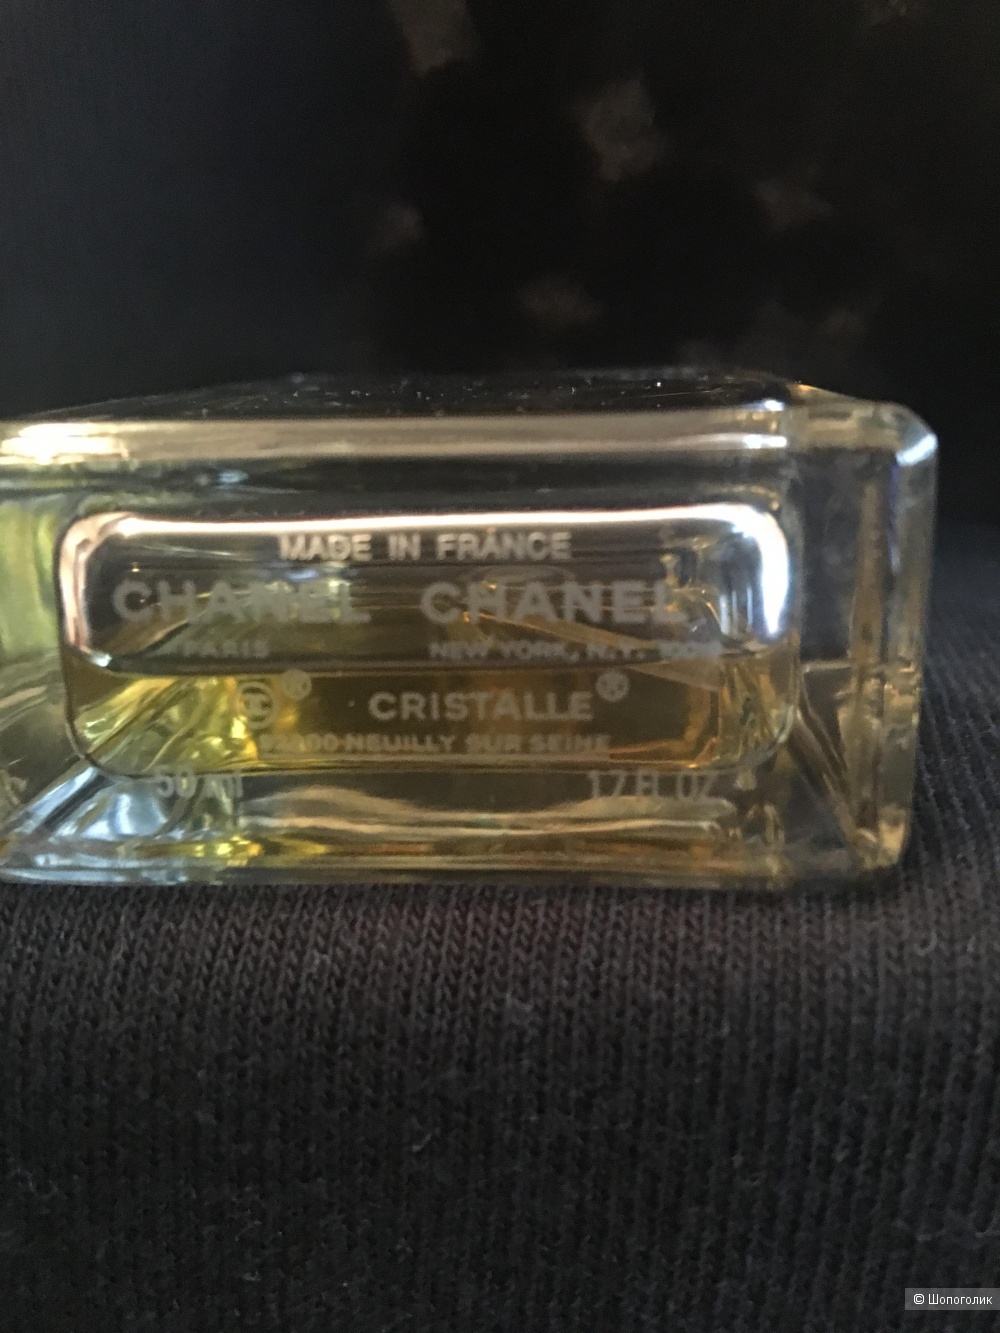 Парфюм Chanel Cristalle,25 ml